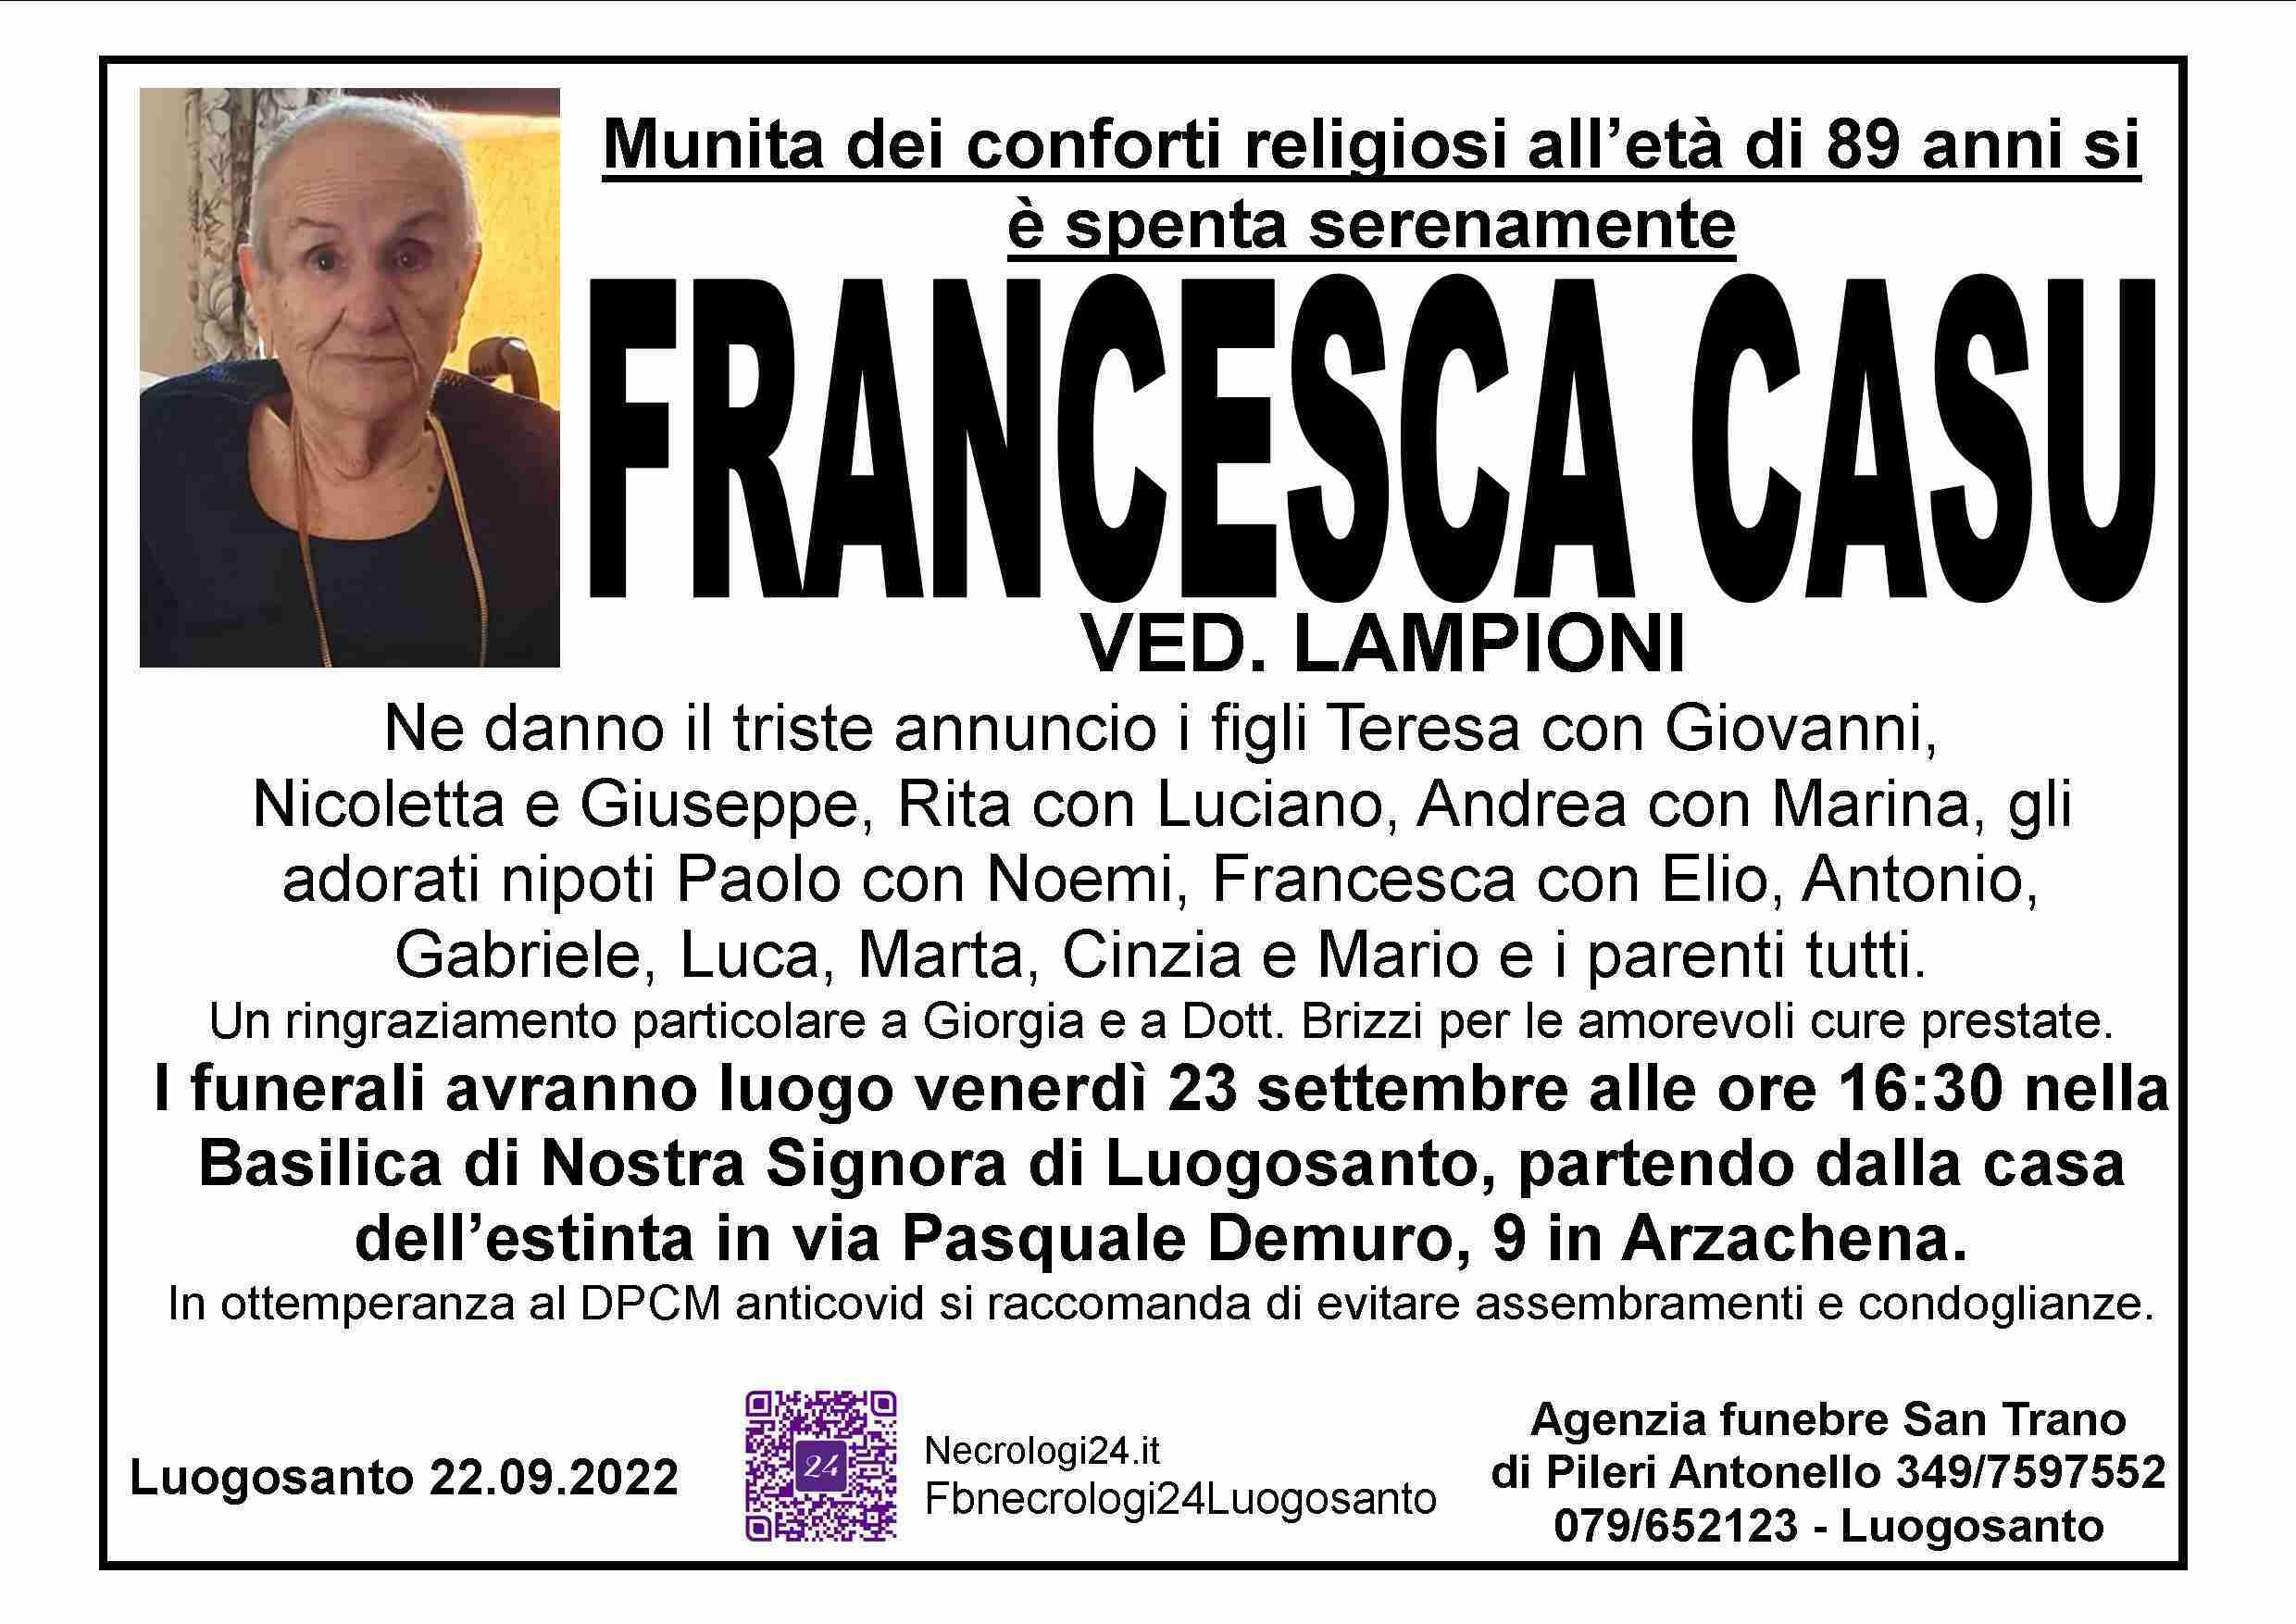 Francesca Casu